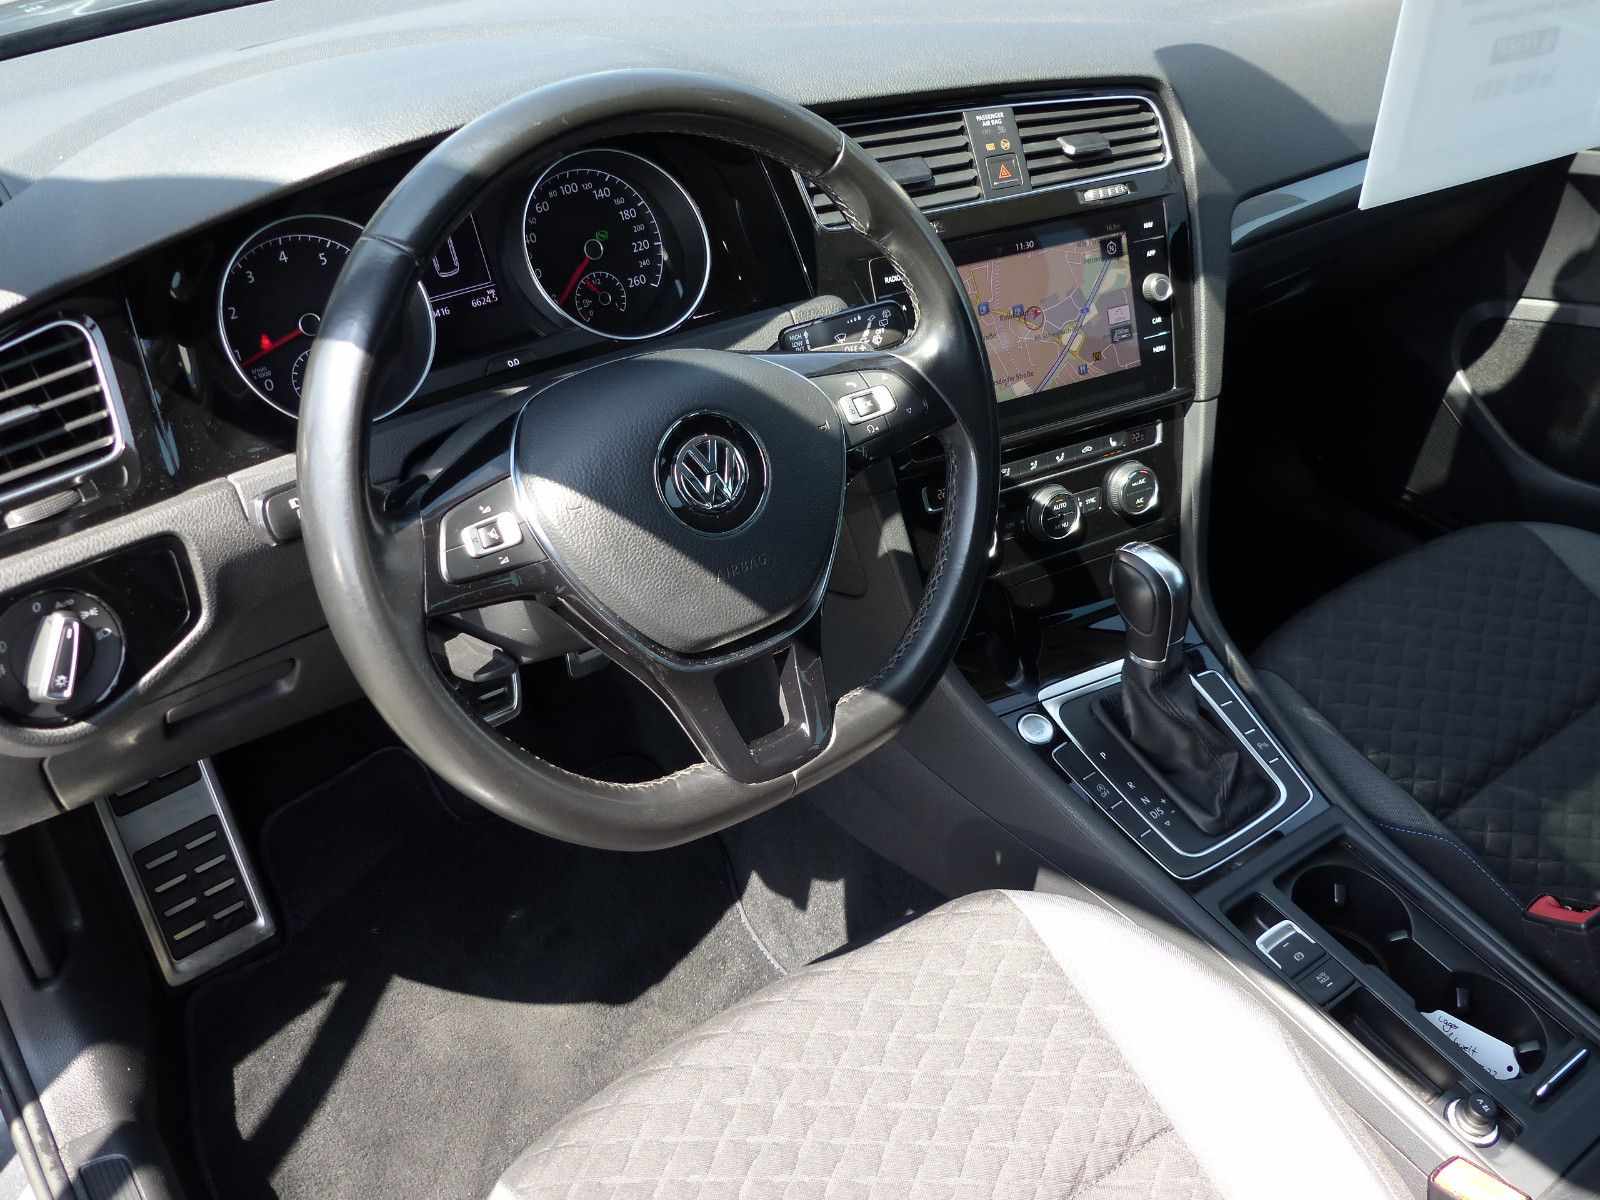 VW GOLF VARIANT (10/20)